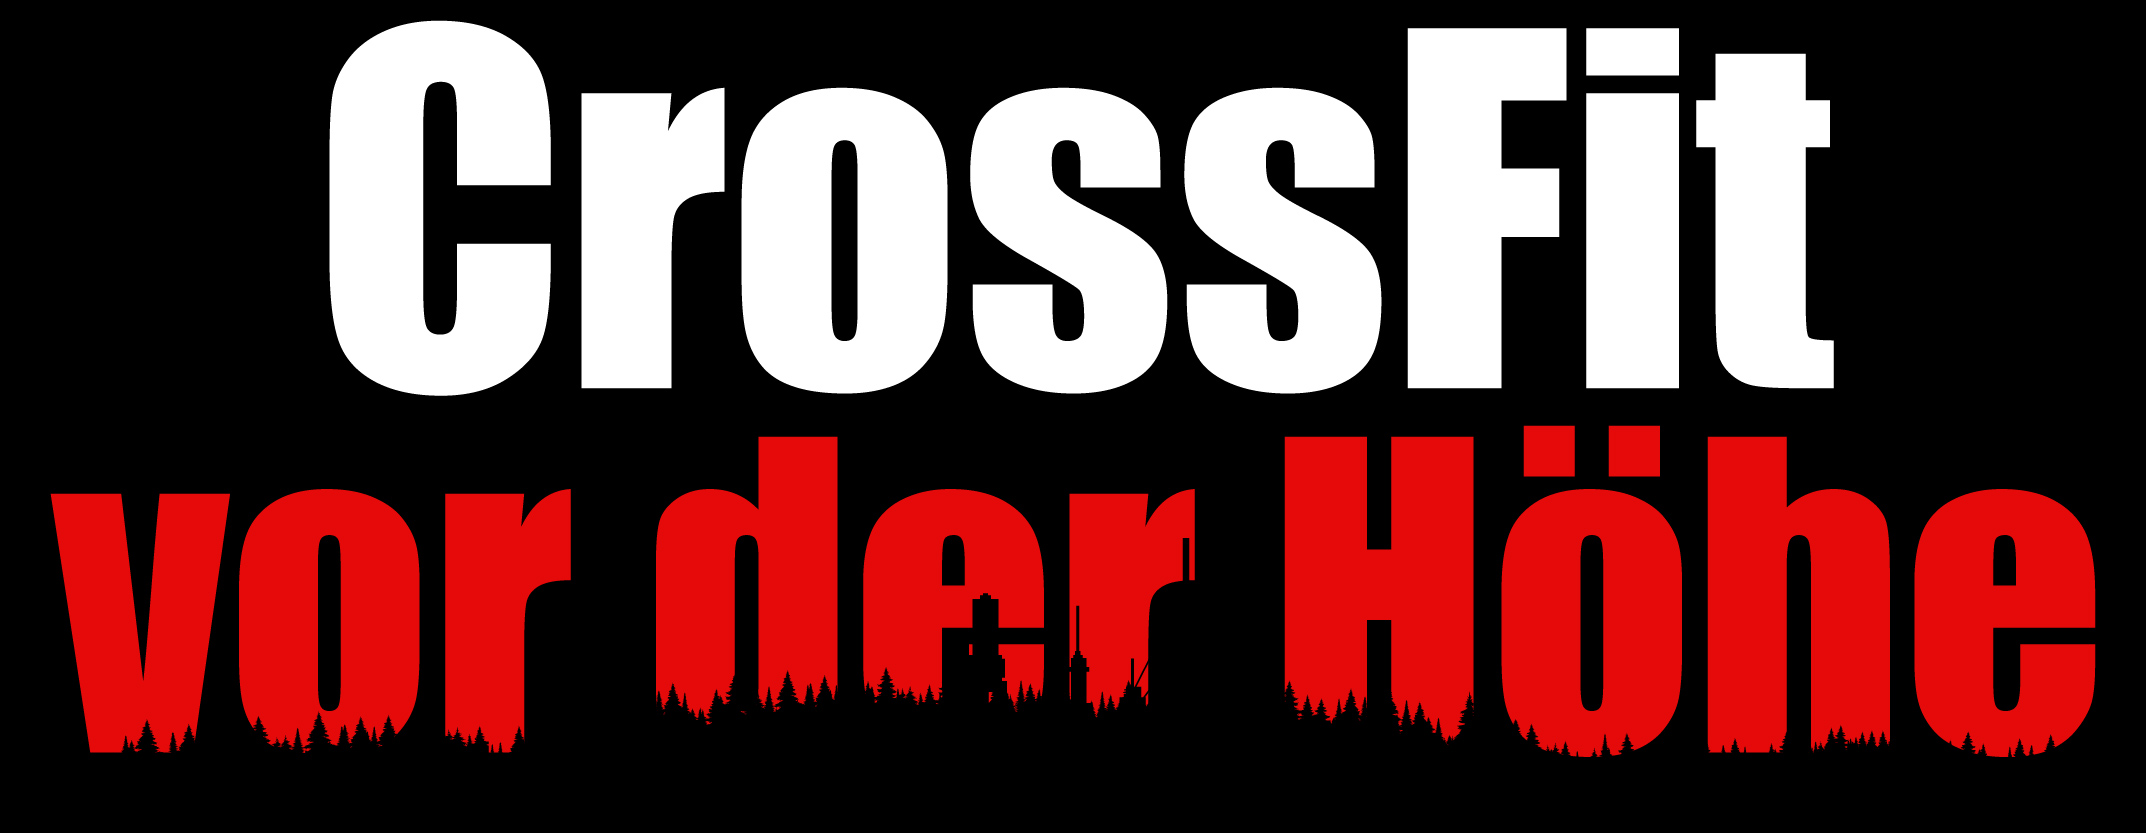 CrossFitvorderHohe-05